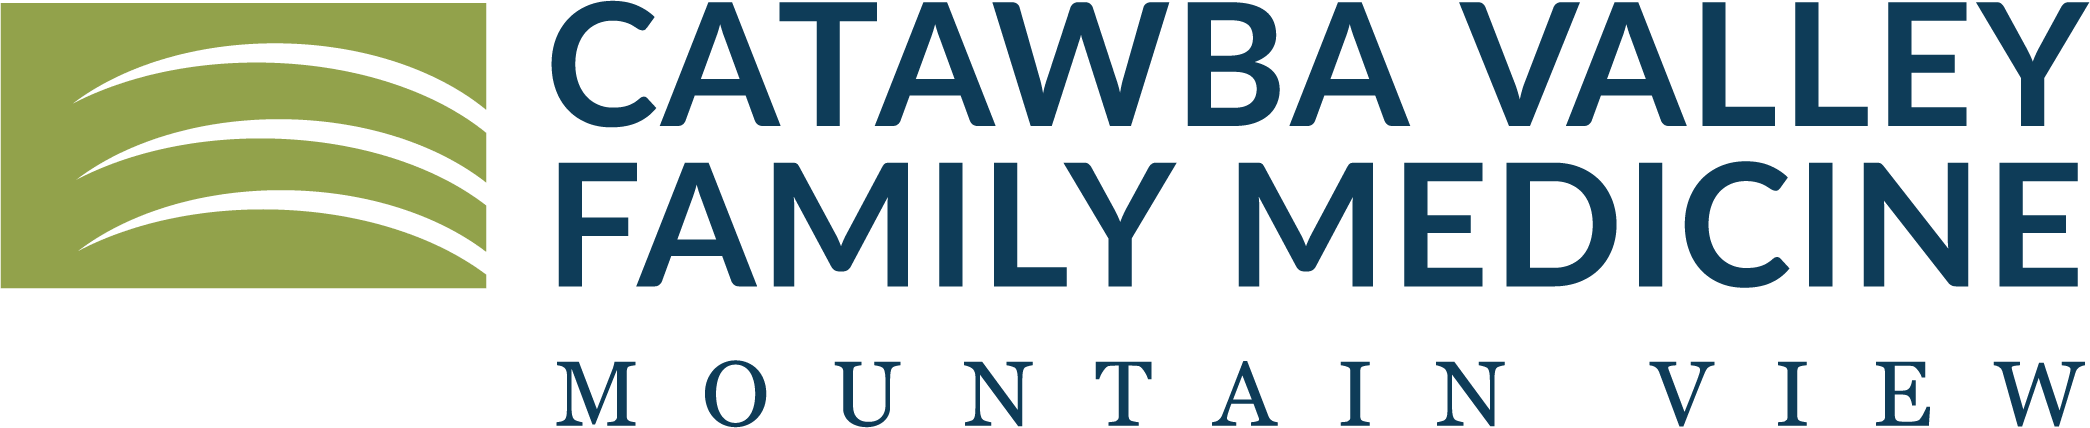 Catawba Valley Family Medicine - Mountain View